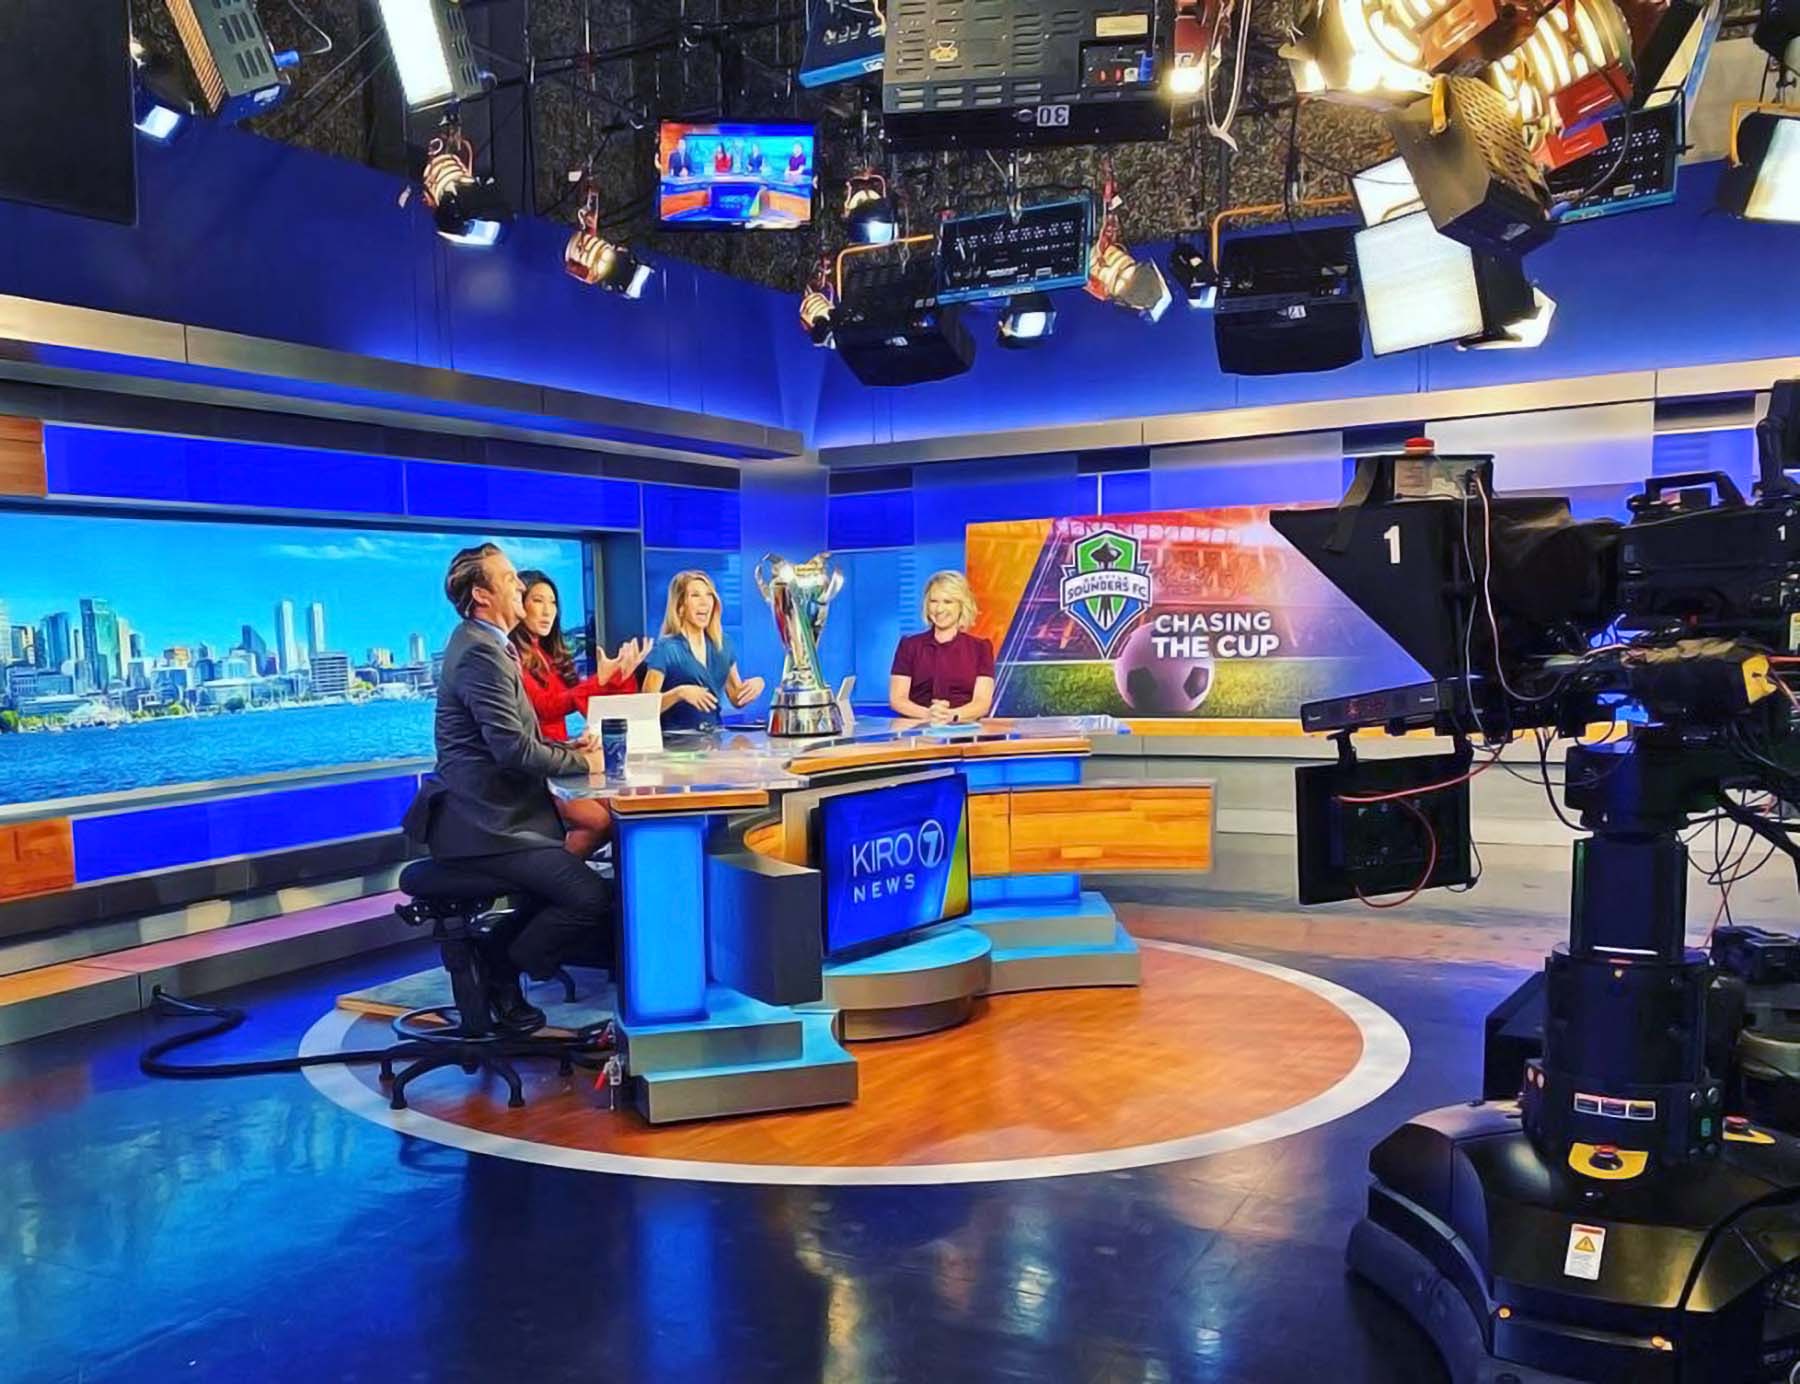 KIRO 7 newscasters at live coverage studio